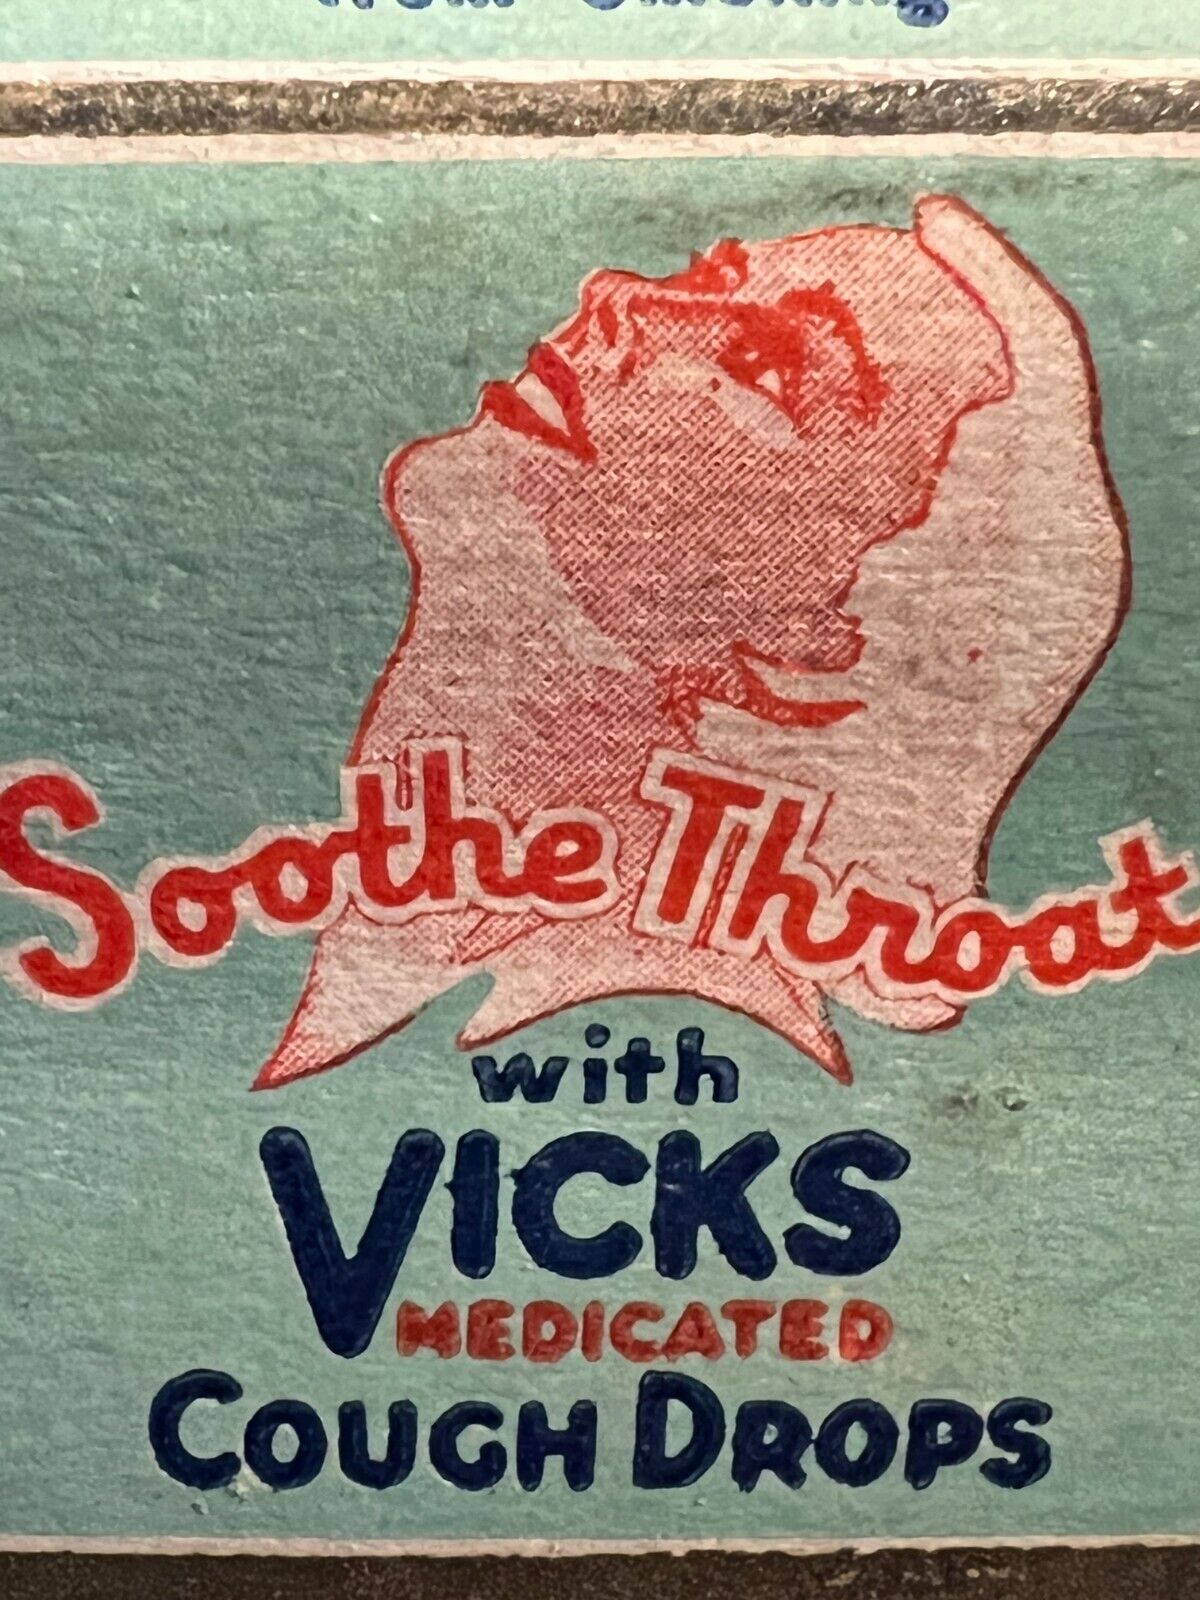 VINTAGE MATCHBOOK - RARE VICKS MEDICATED COUGH DROPS - SOOTH THROAT - UNSTRUCK